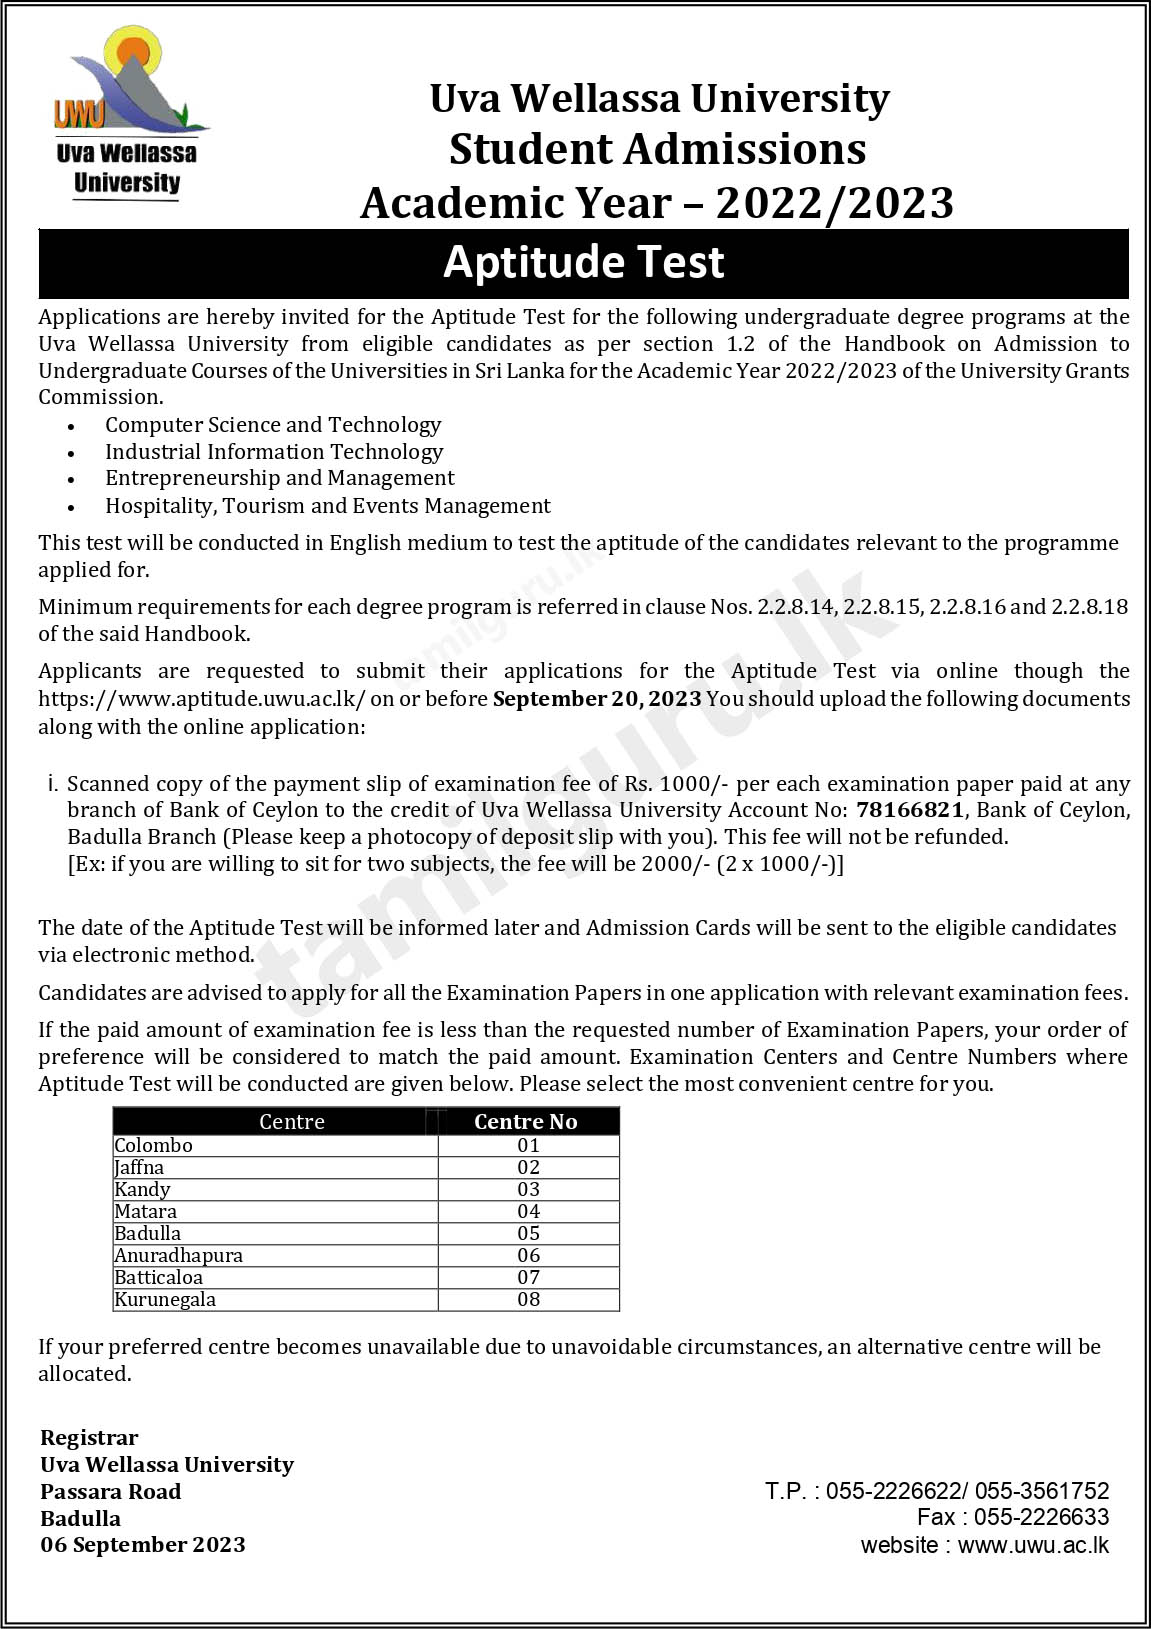 Uva Wellassa University Aptitude Test Application 2023 (GCE A/L Batch 2022)